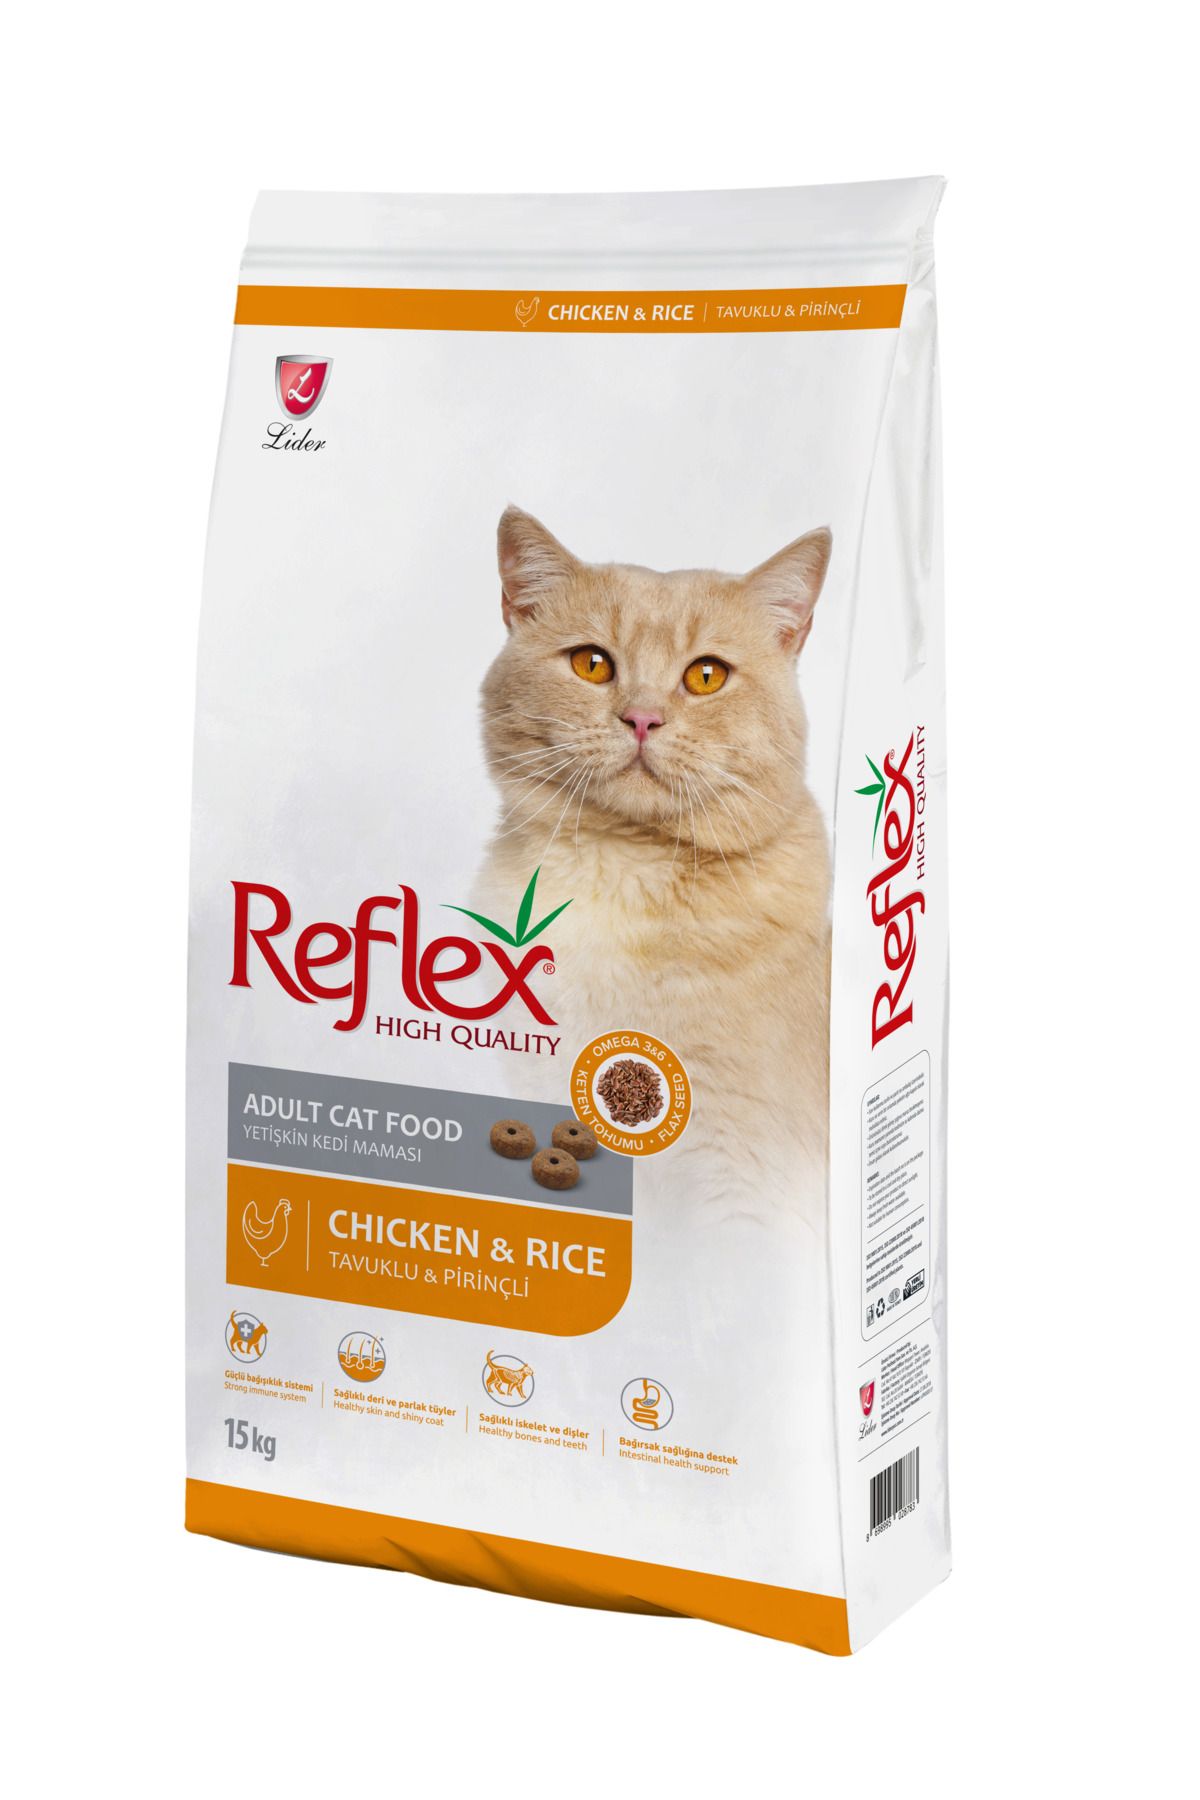 Reflex Tavuklu Ve Pirinçli Yetişkin Kedi Maması 15 Kg